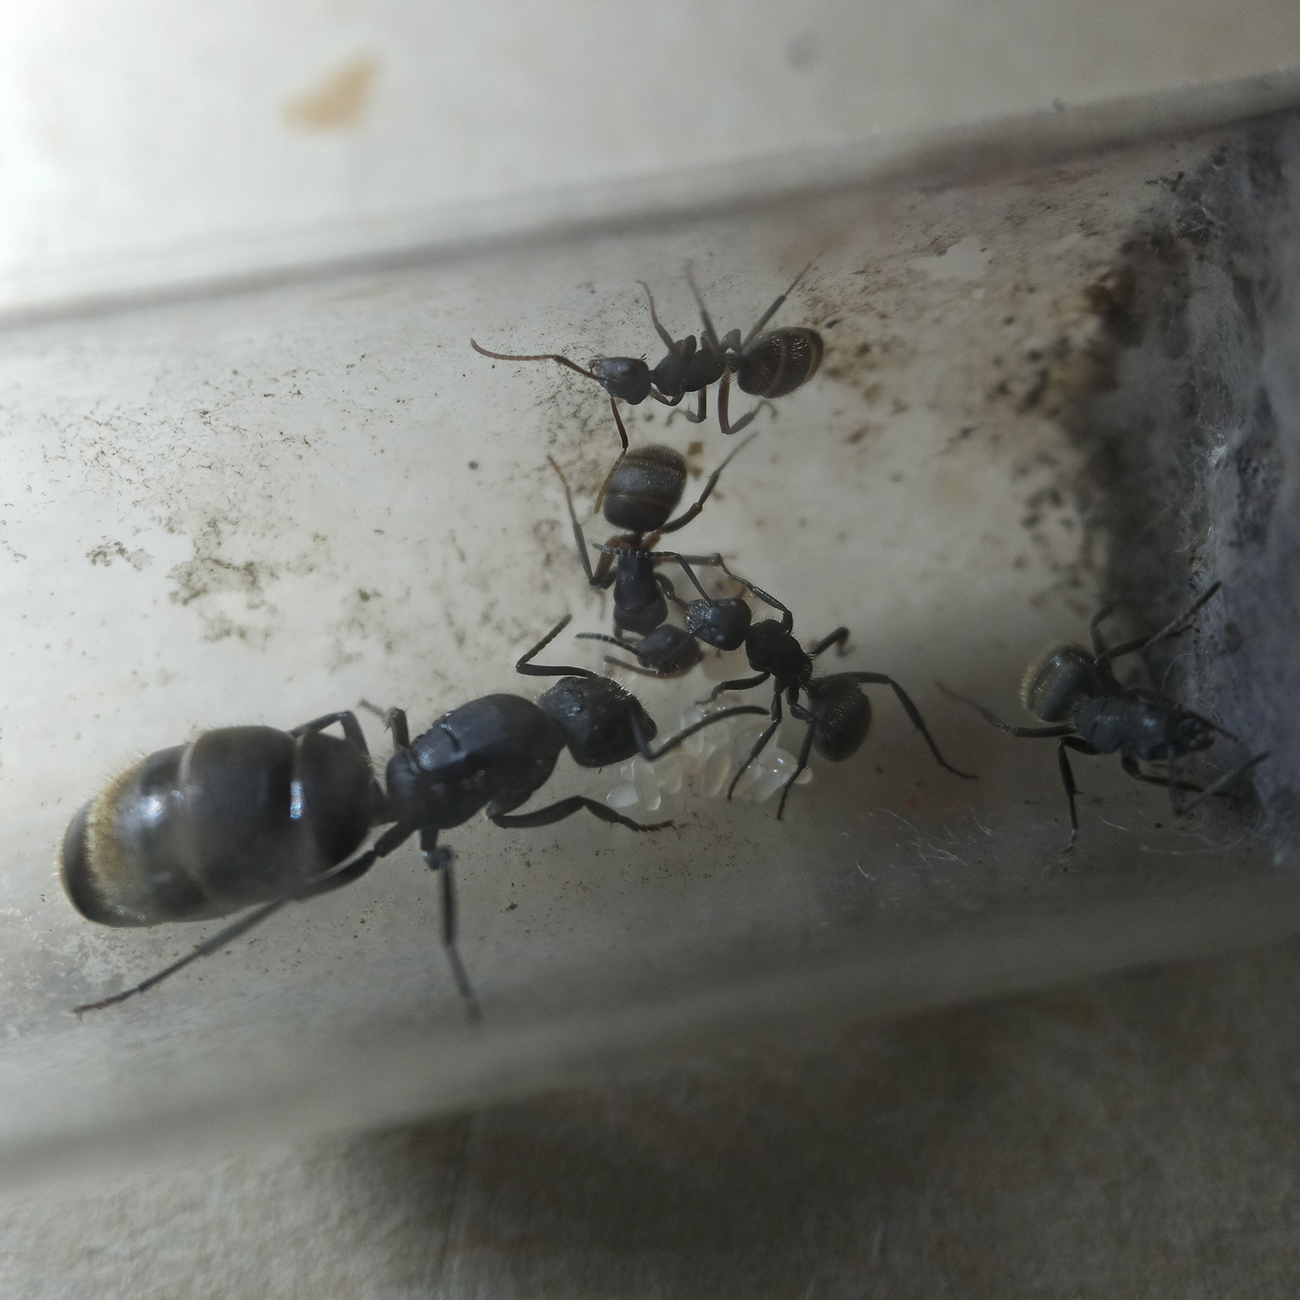 Camponotus mus - 26/10/20